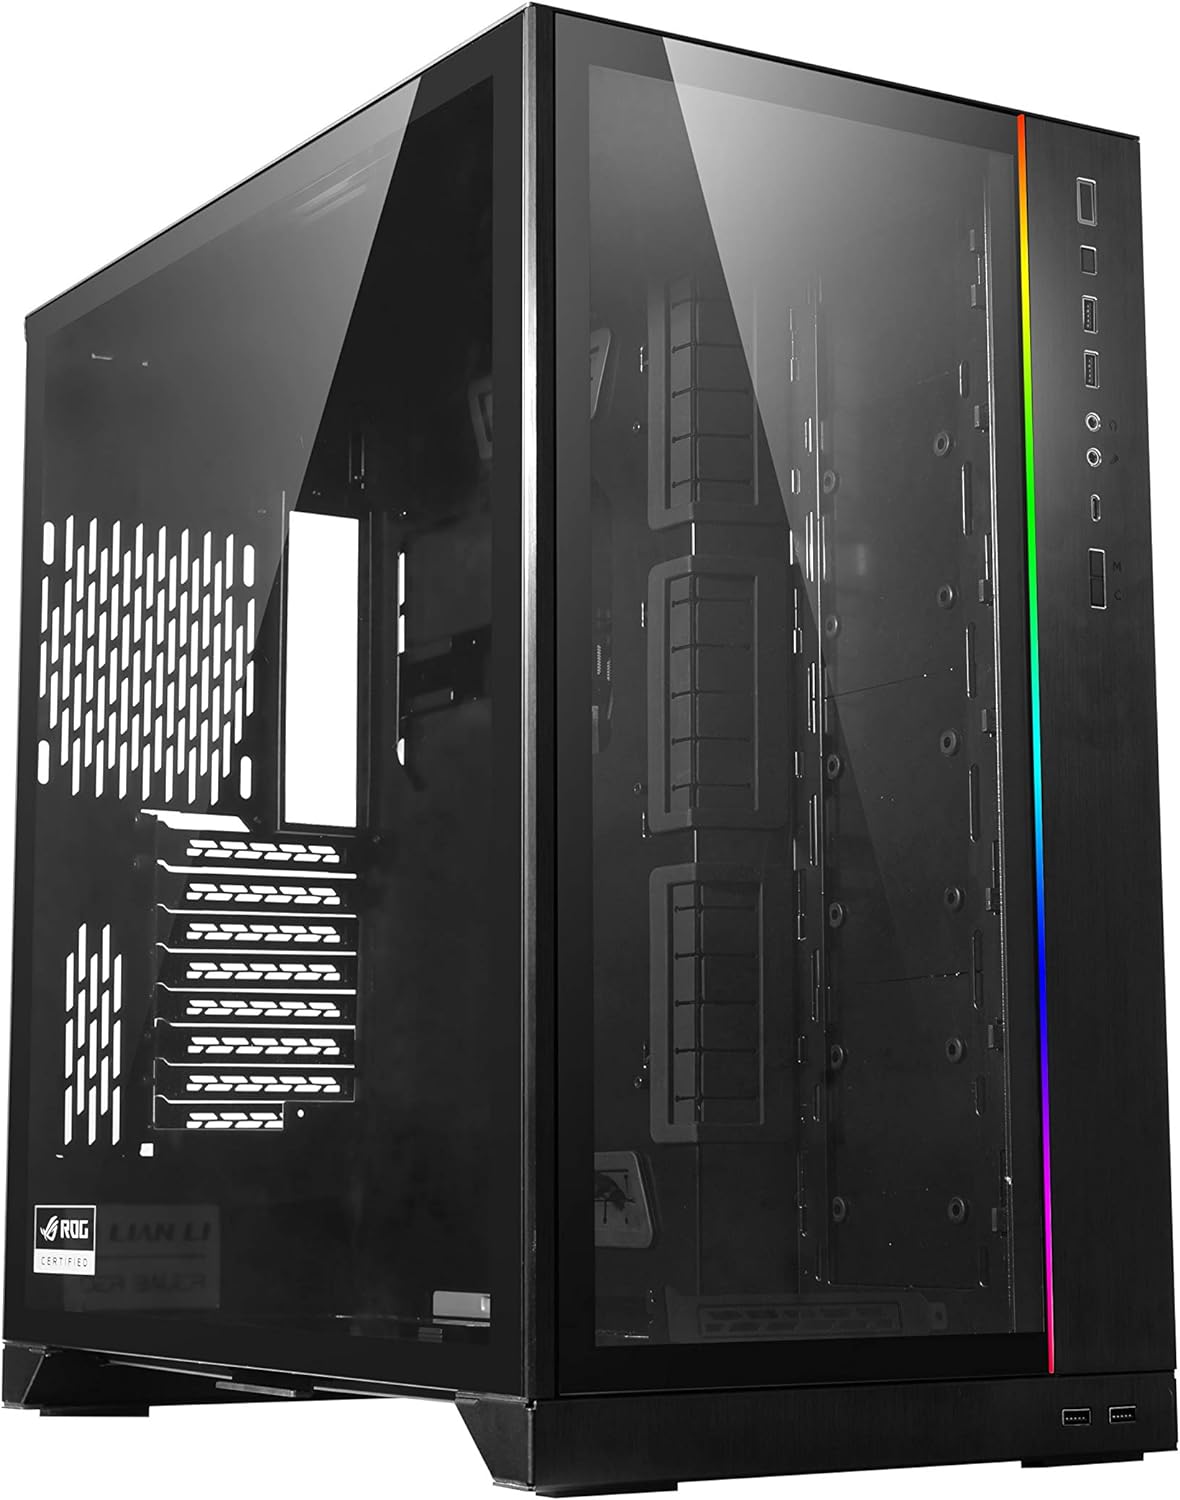 SKU: 0840353009837, Barcode: 840353009837 - Lian Li O11 Dynamic XL Rog Certified Atx Full Tower Gaming Computer Case - Black